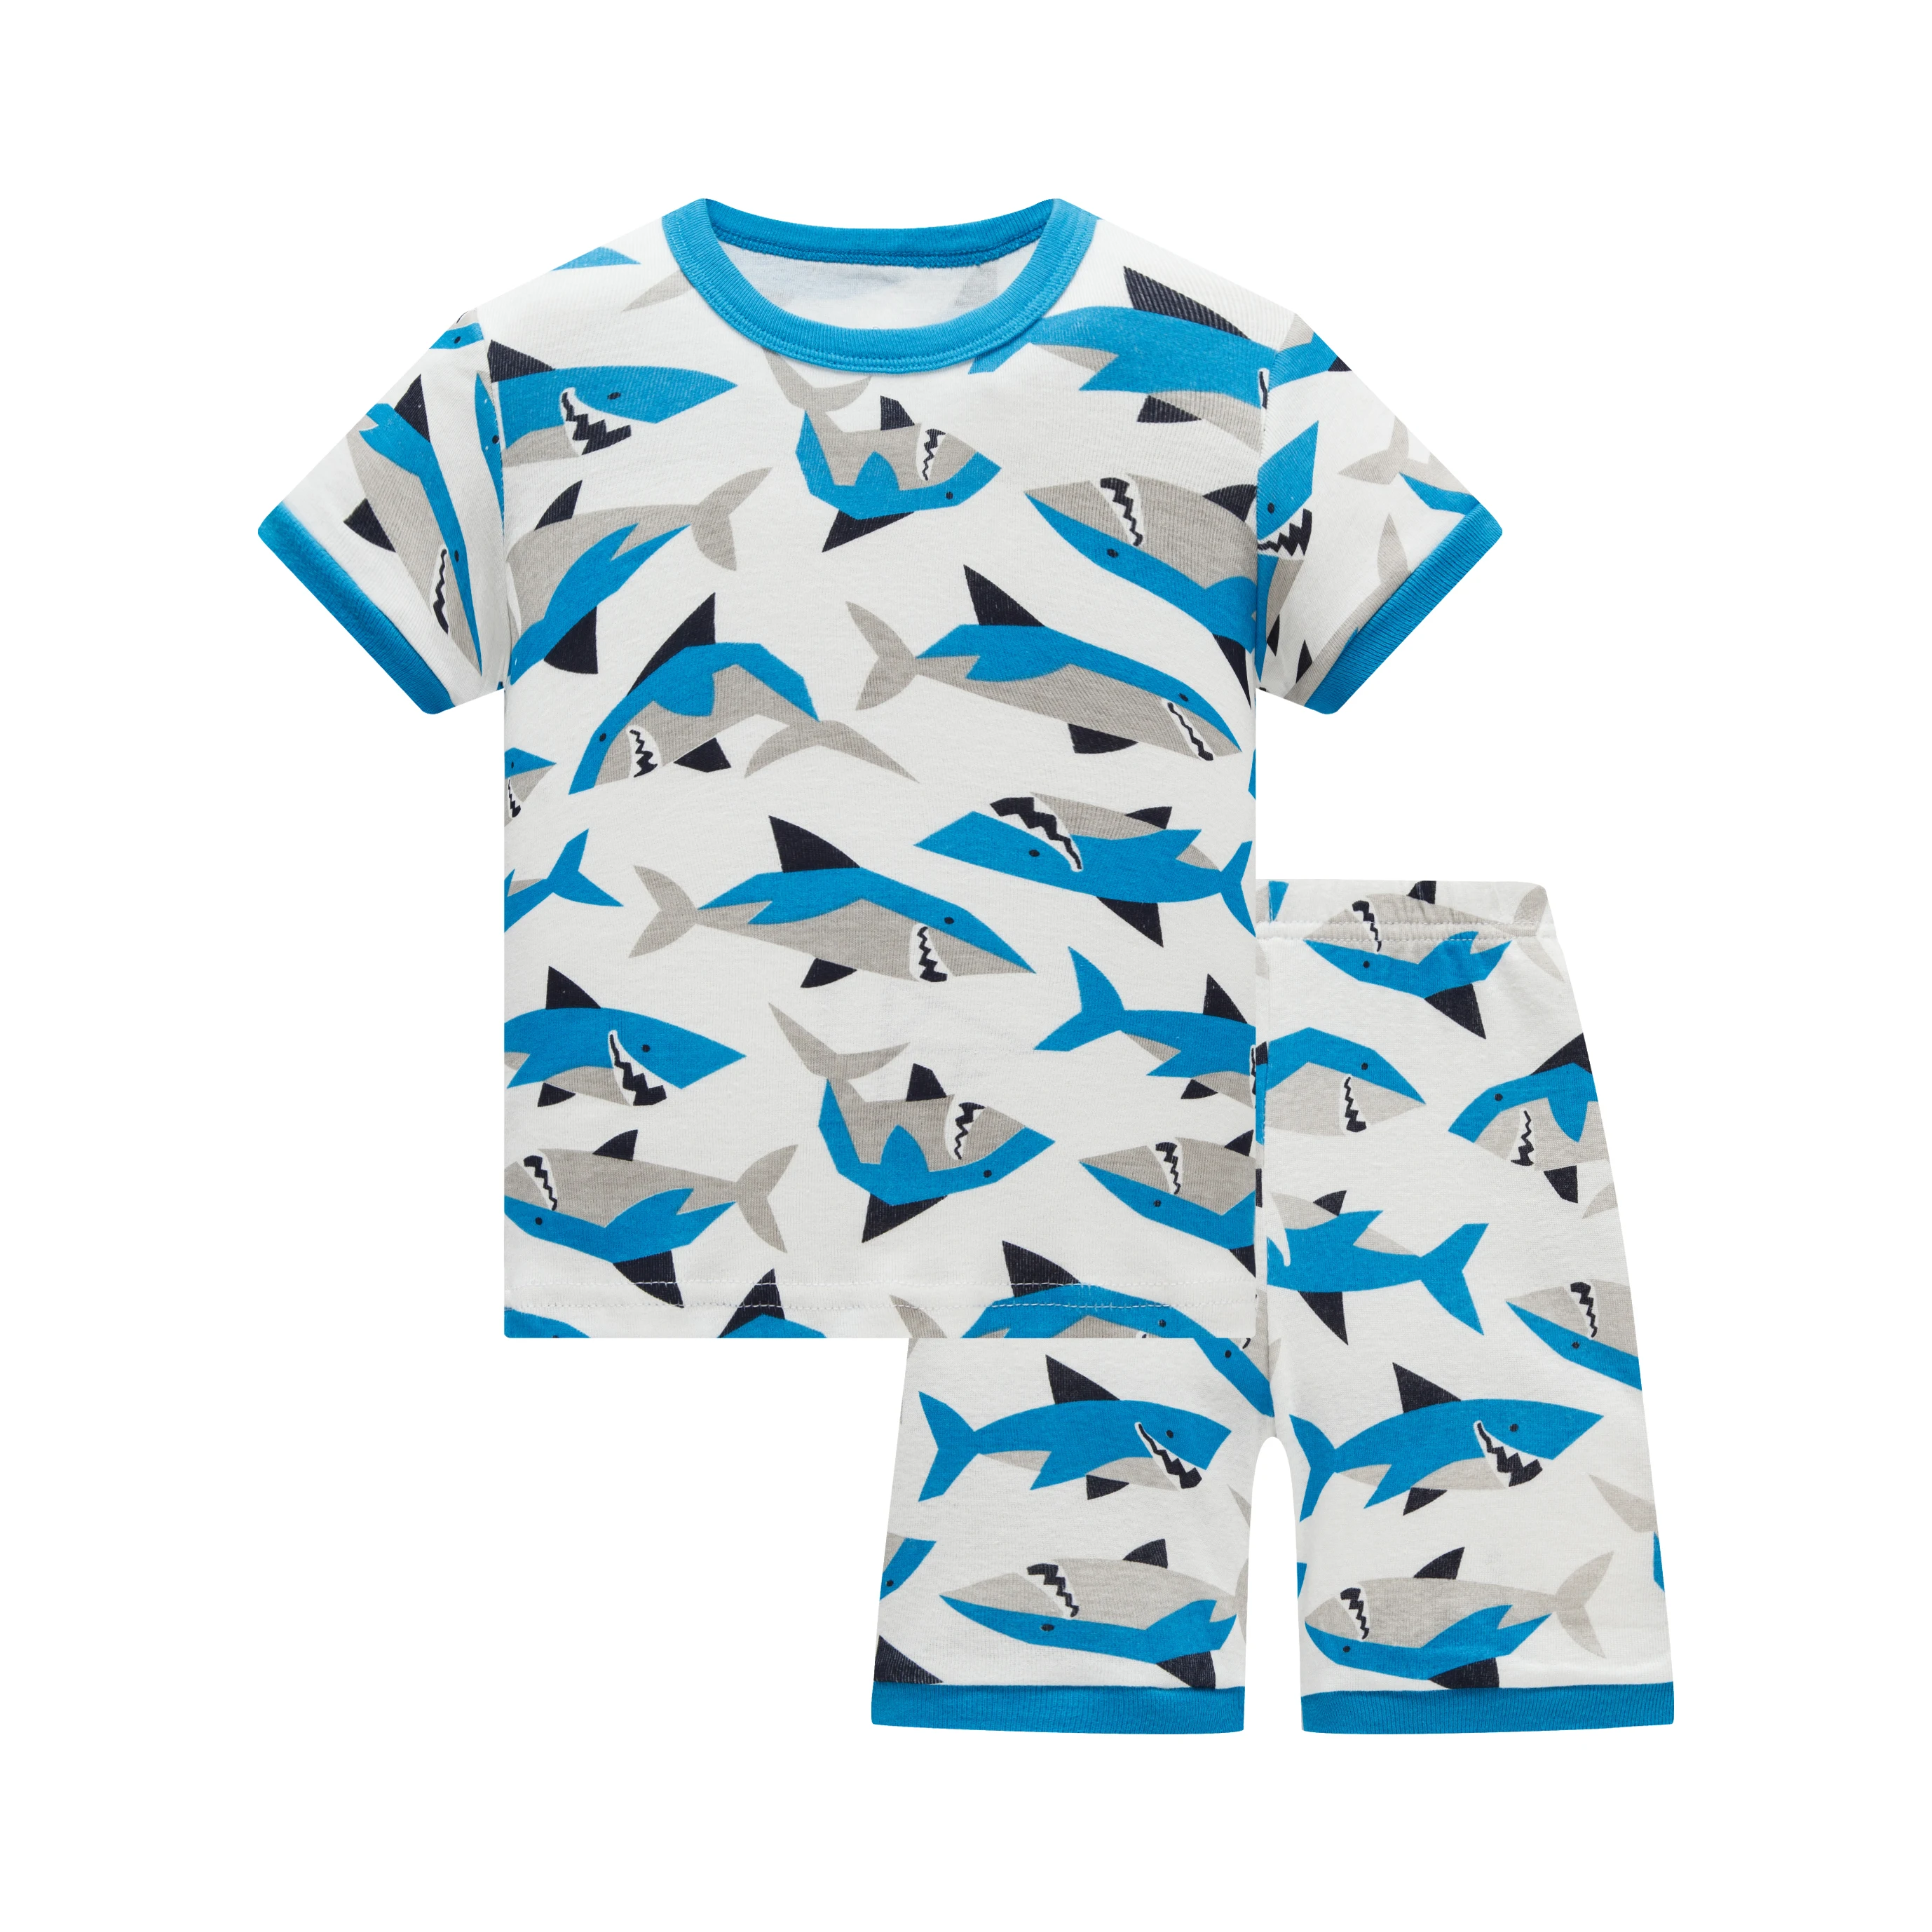 Plane 2021 Summer Children's Pajamas Boys Pijamas Suits Kids Tee Shirts Tops Trouser Pyjamas Sale Items